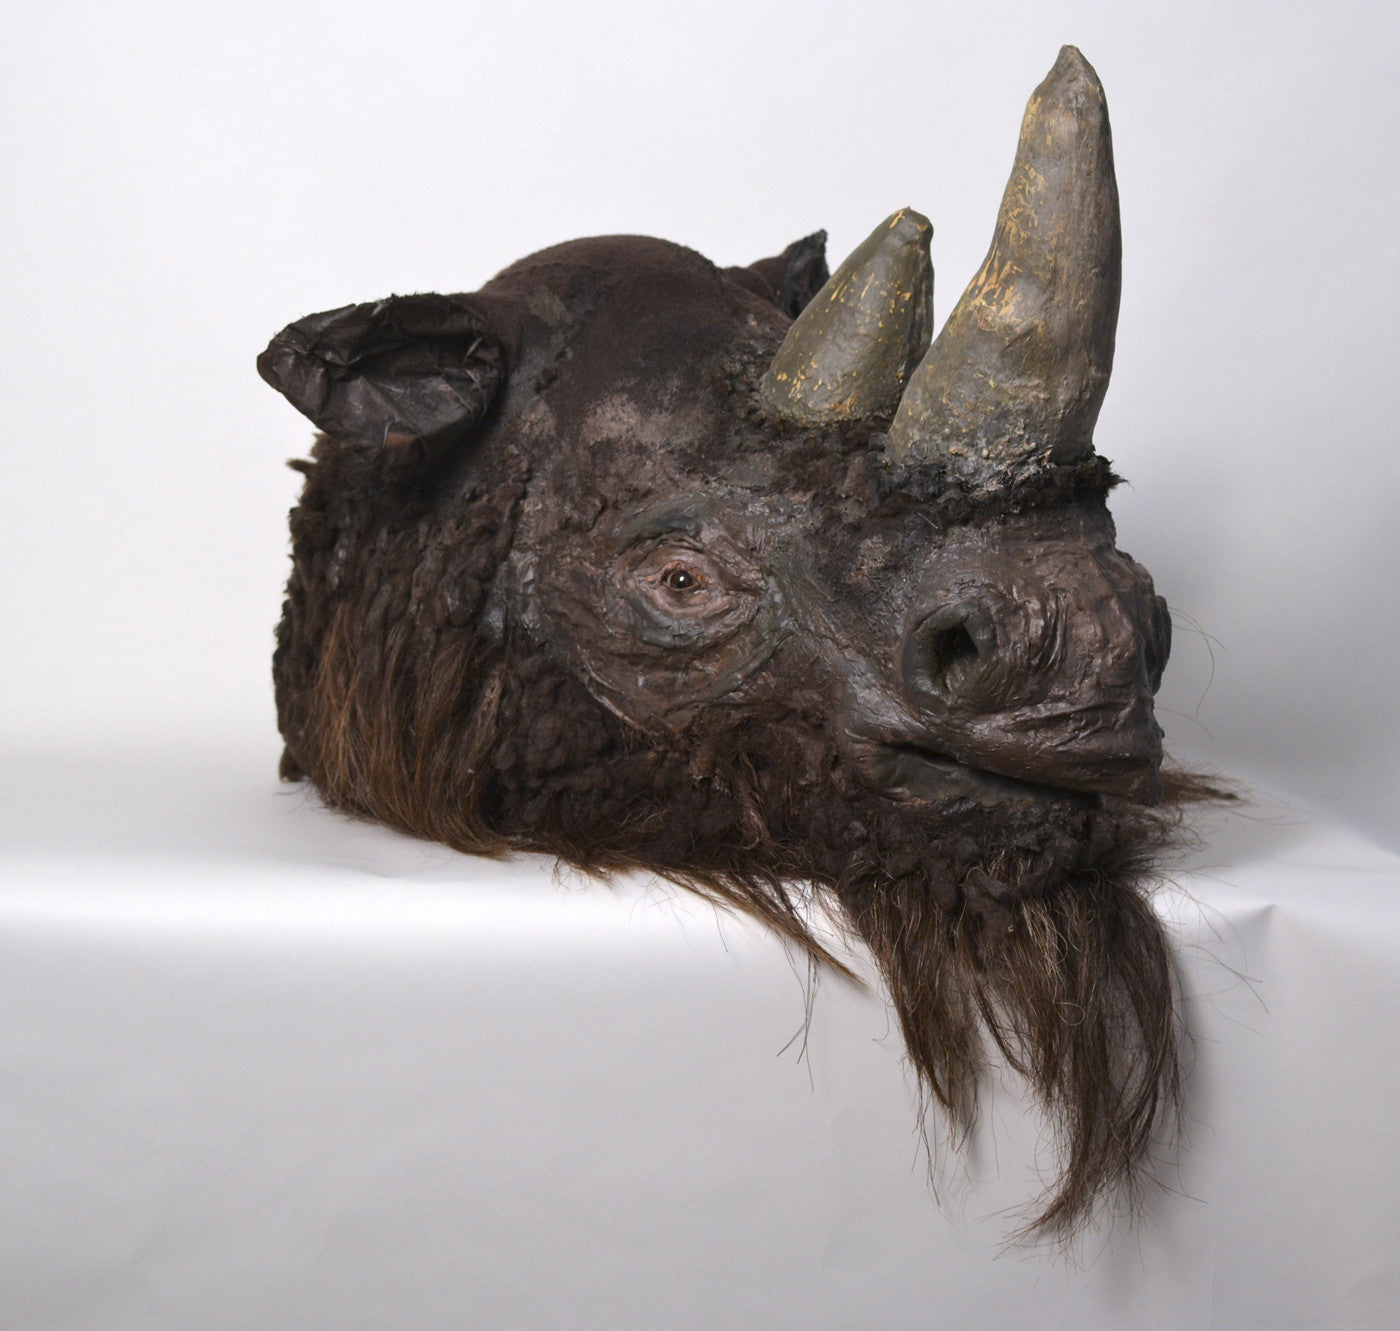 Rachel Frank, "Coelodonta antiquitatis, Pleistocene Era Woolly Rhinoceros"